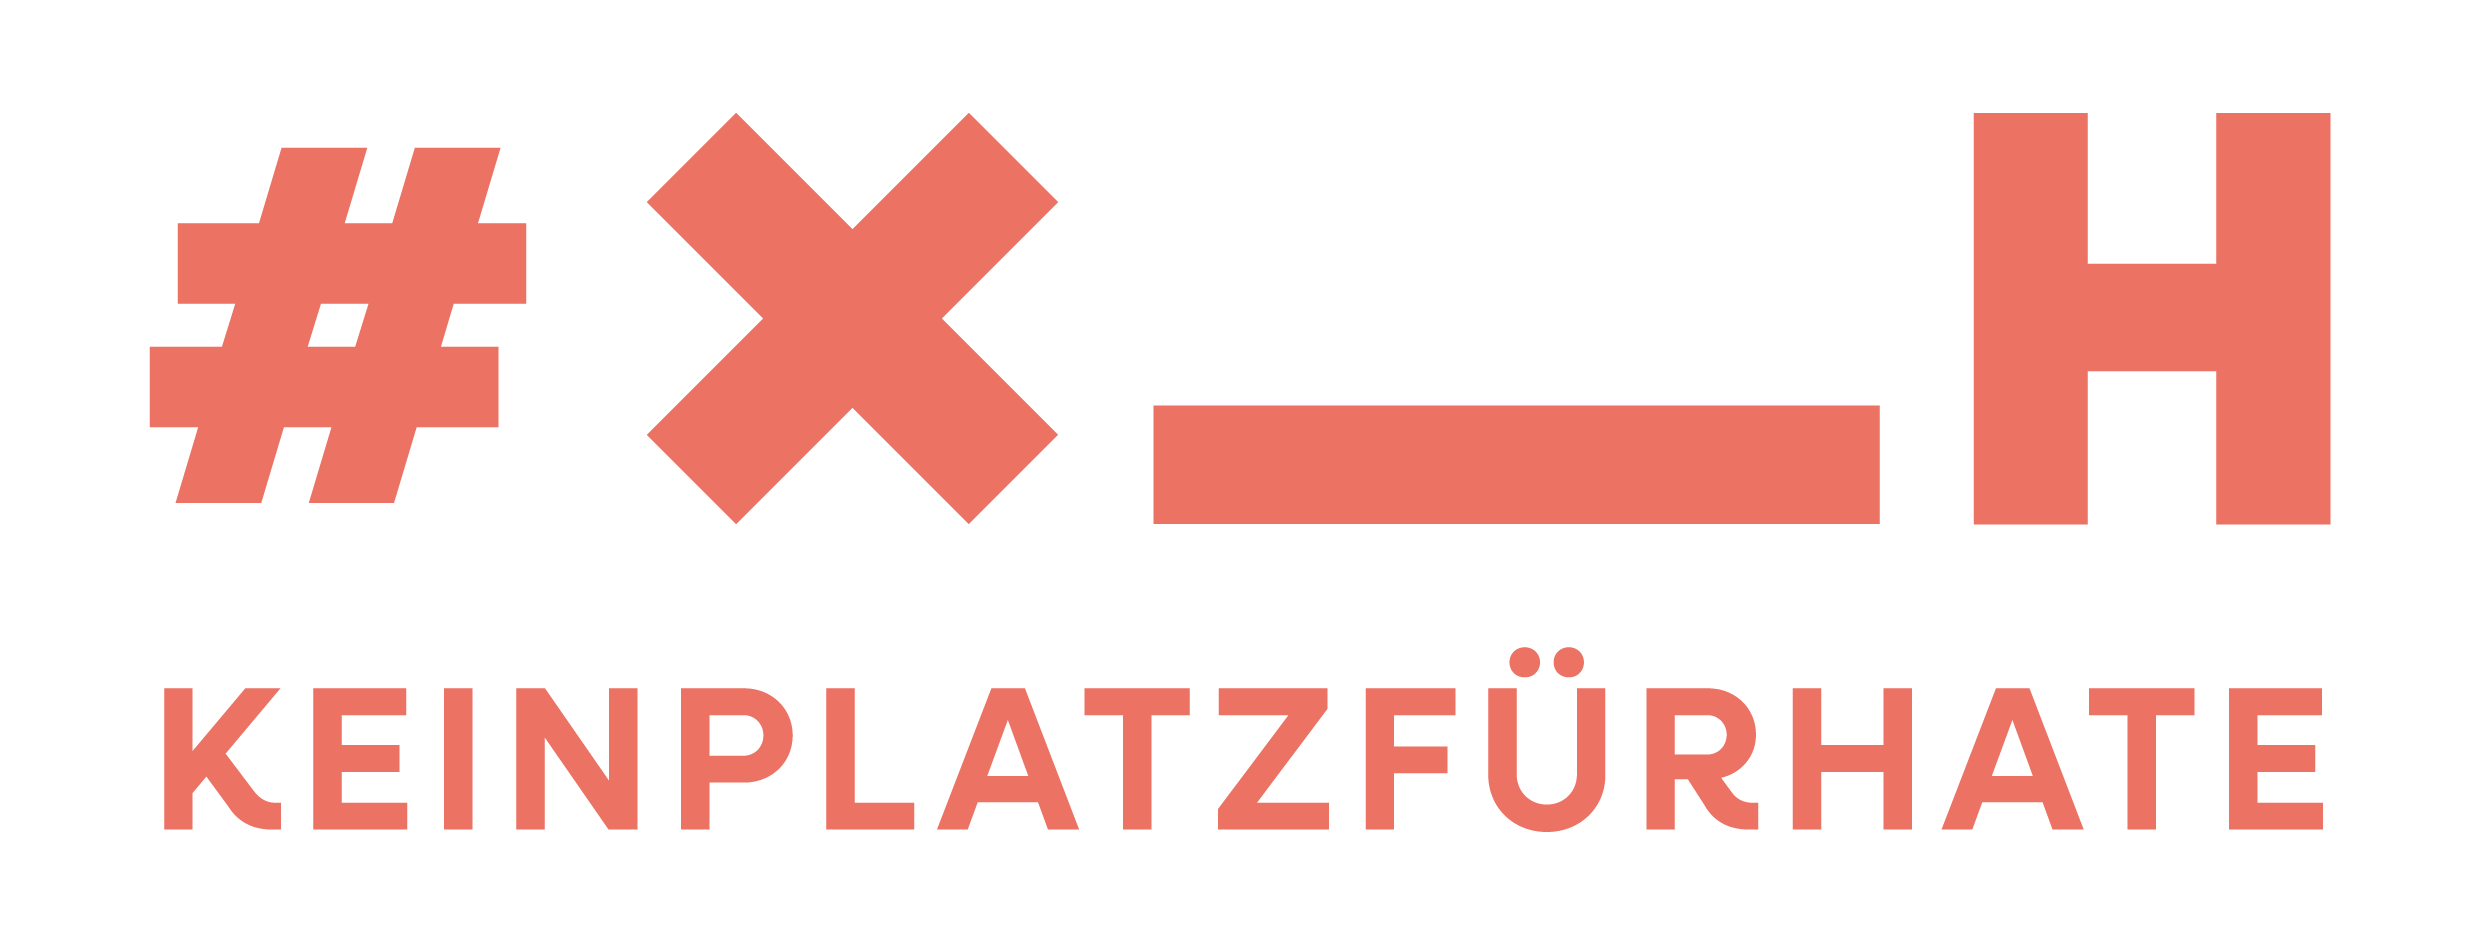 Empowerment-Toolbox/ #KeinPlatzfürHate (Cyber)Mobbingkampagne